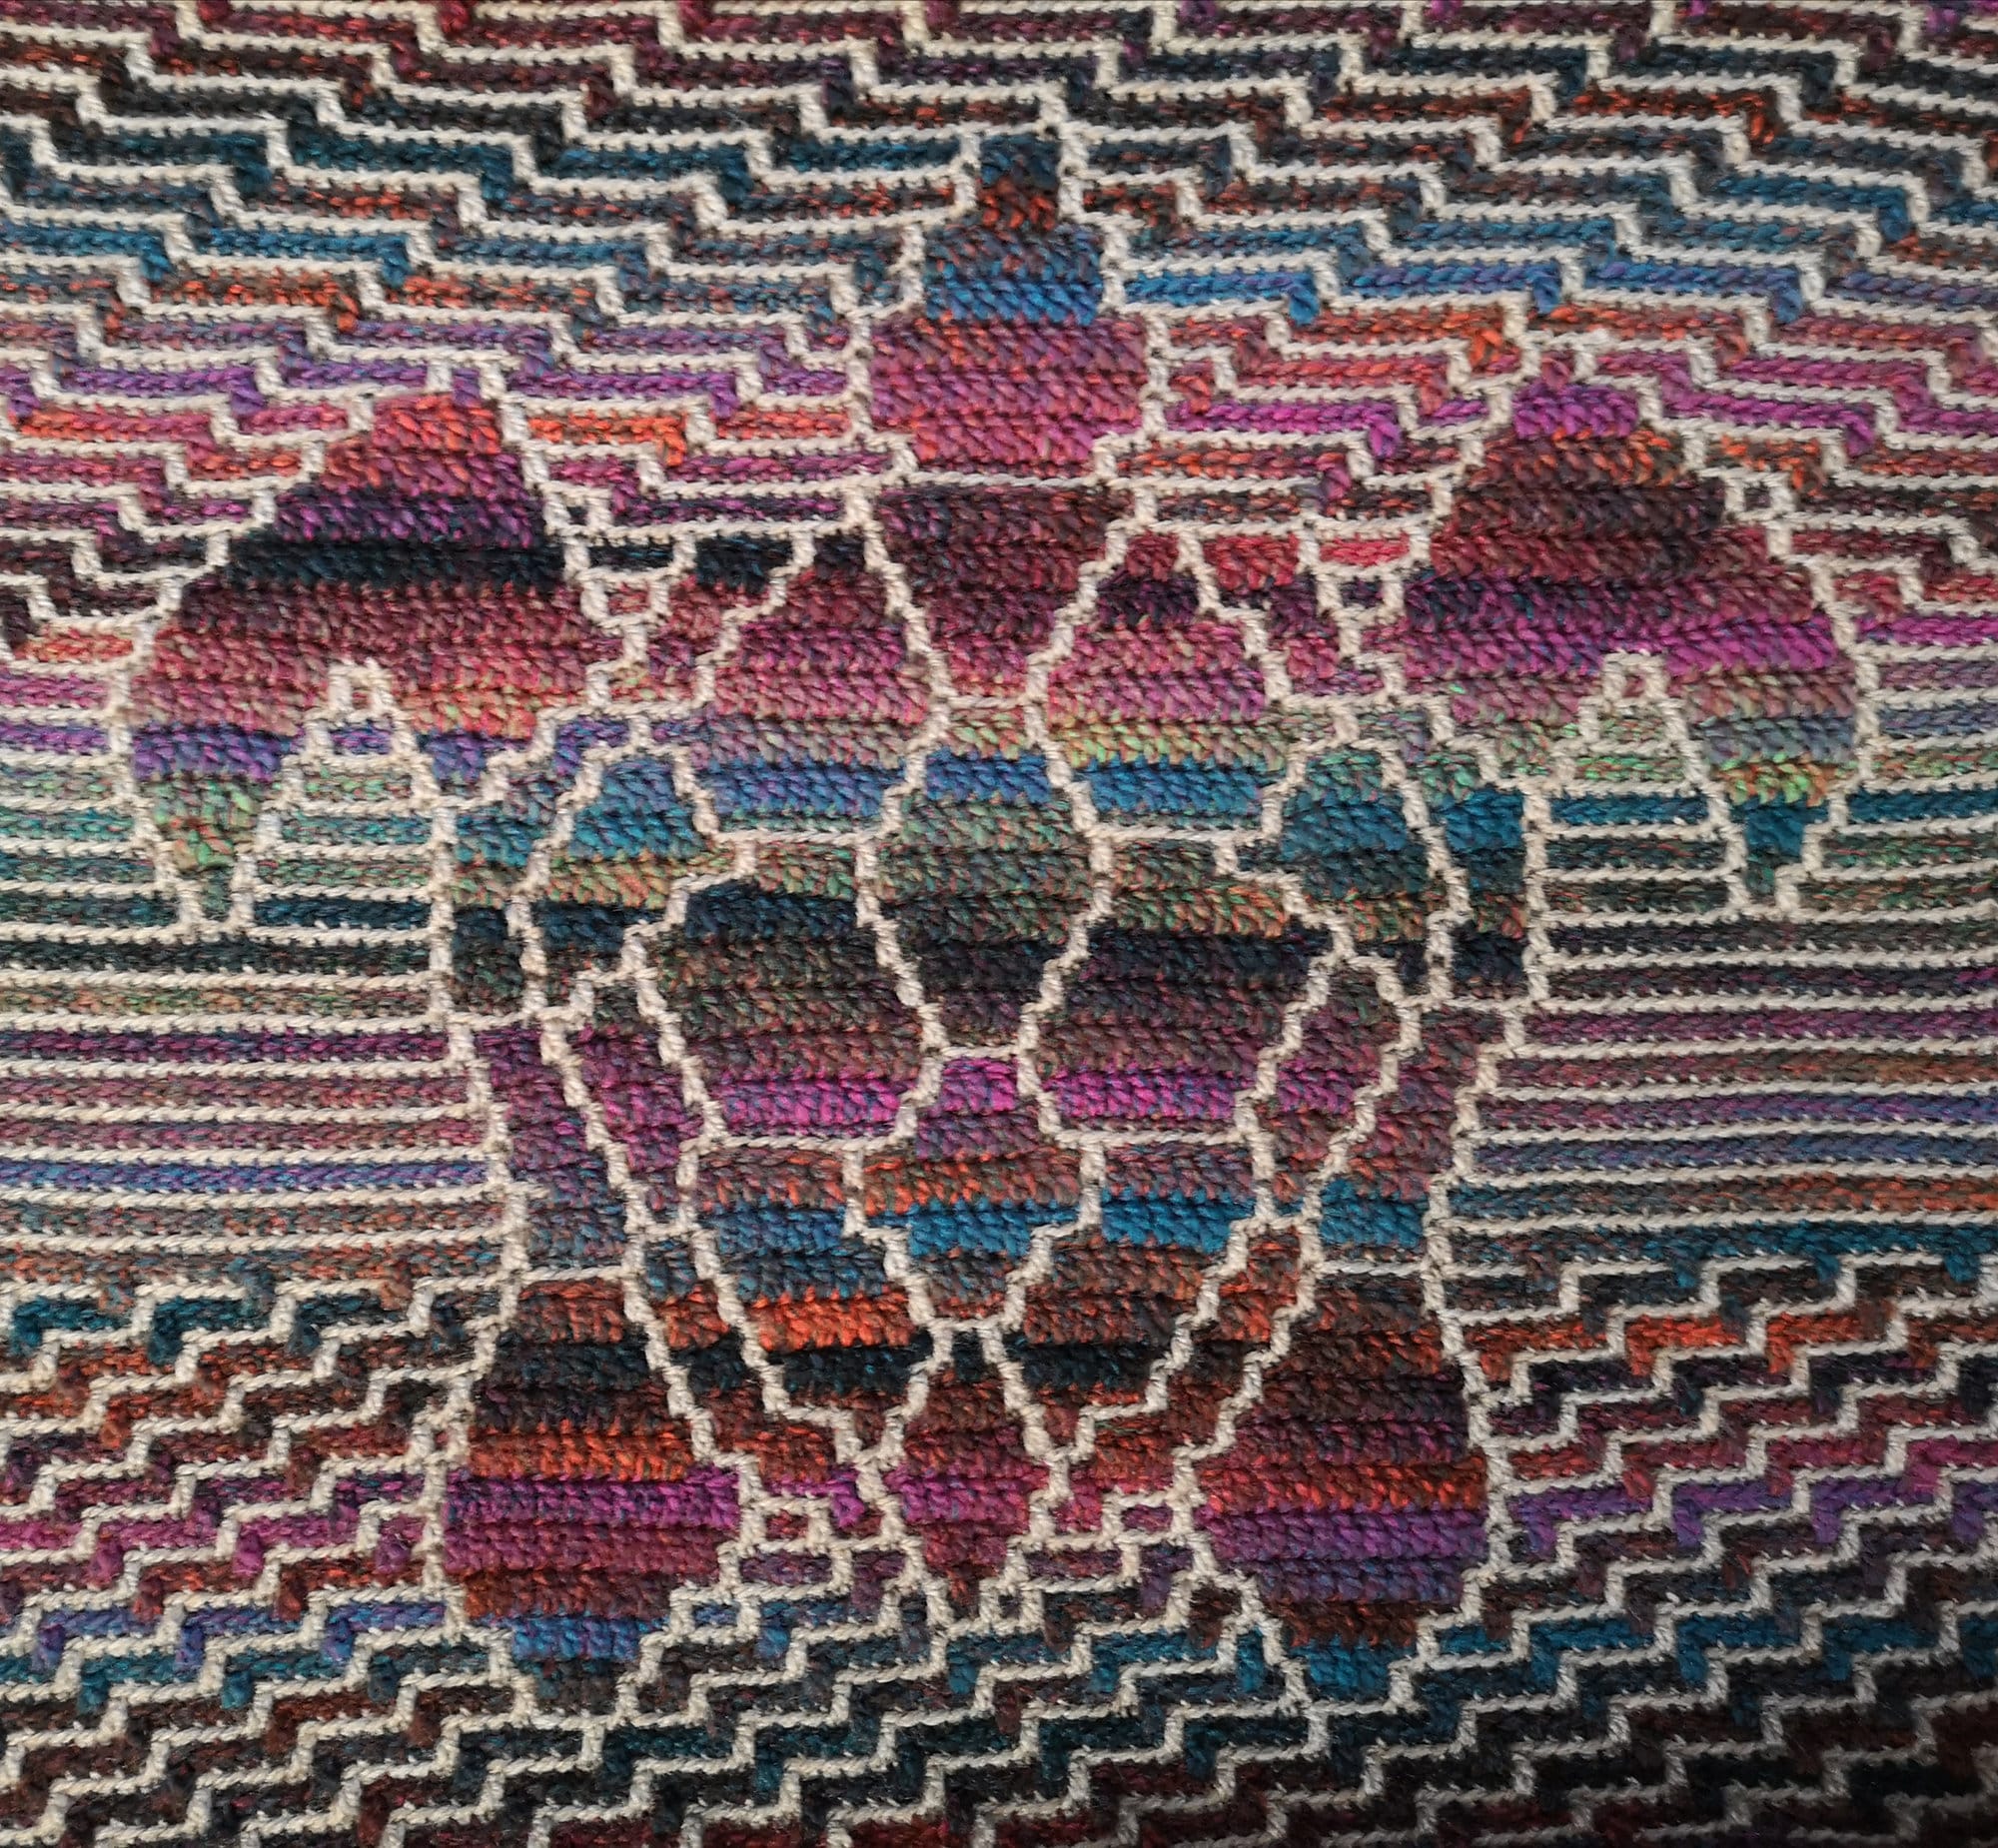 Boye Interlocking Needlepoint, Knitting, and Crochet Qatar